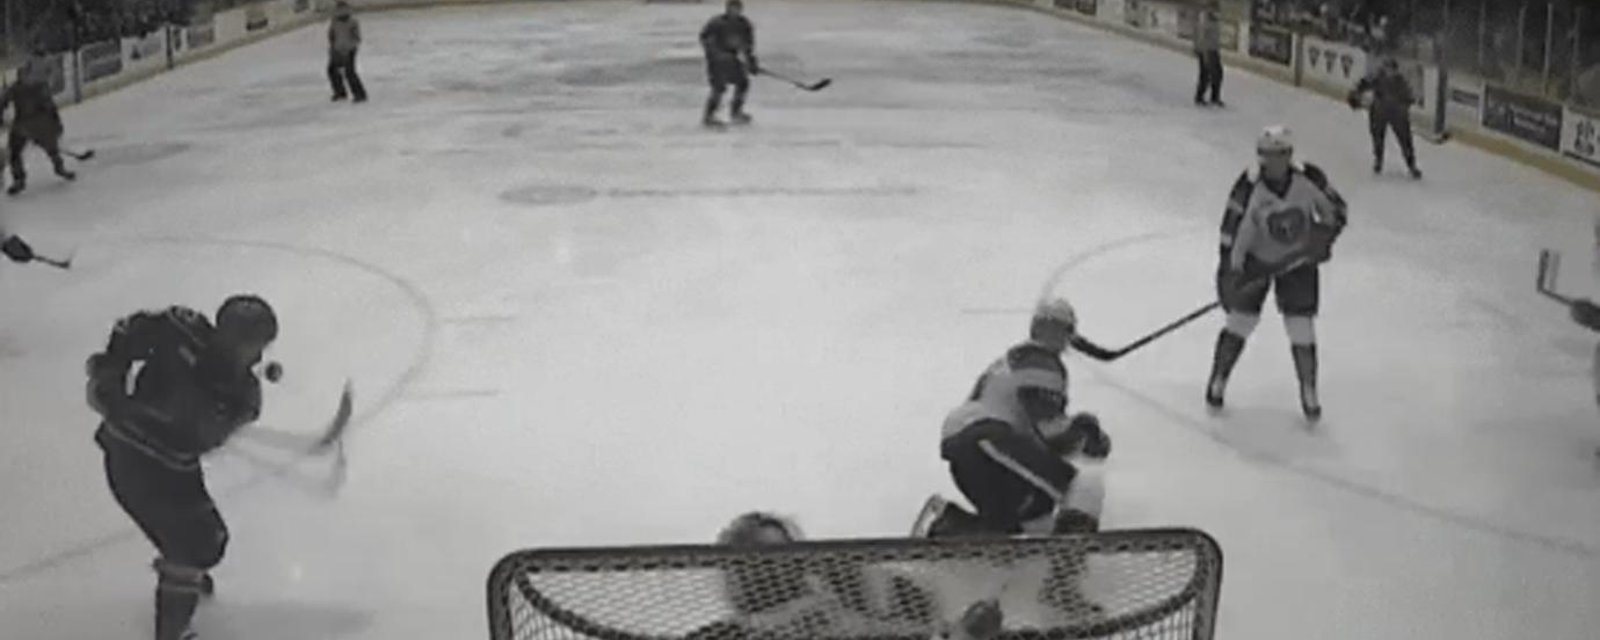 Junior hockey player find creative way to score. 